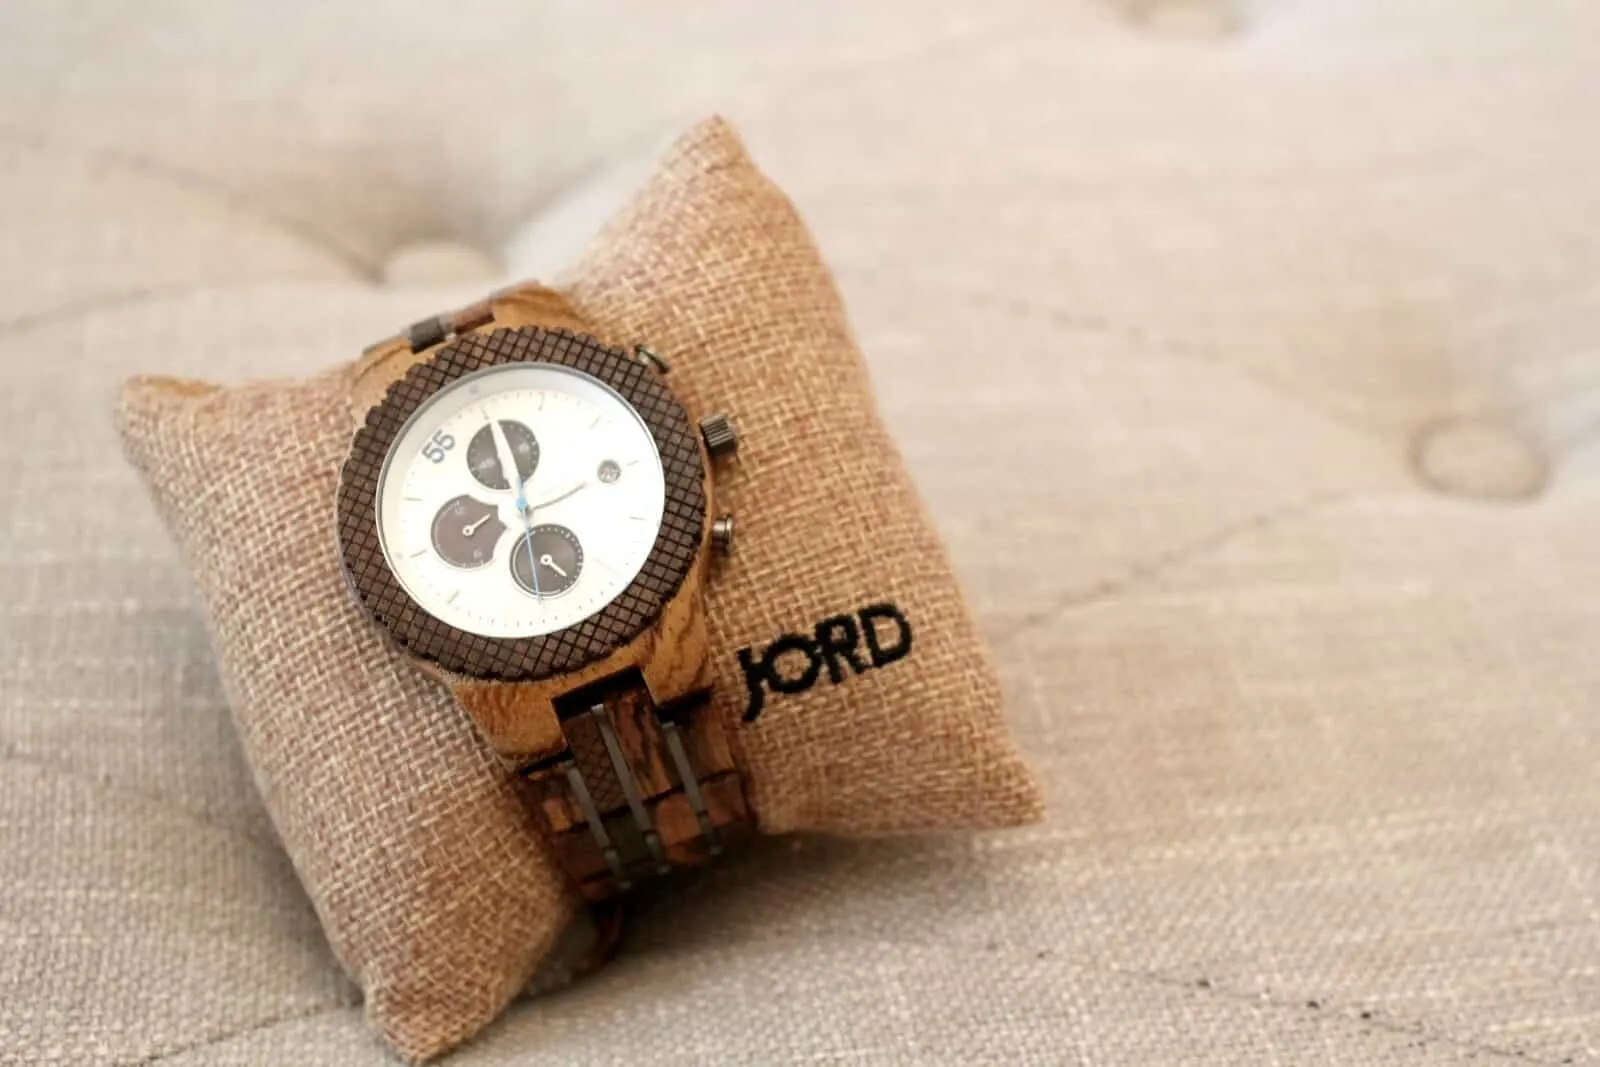 Jord watch.